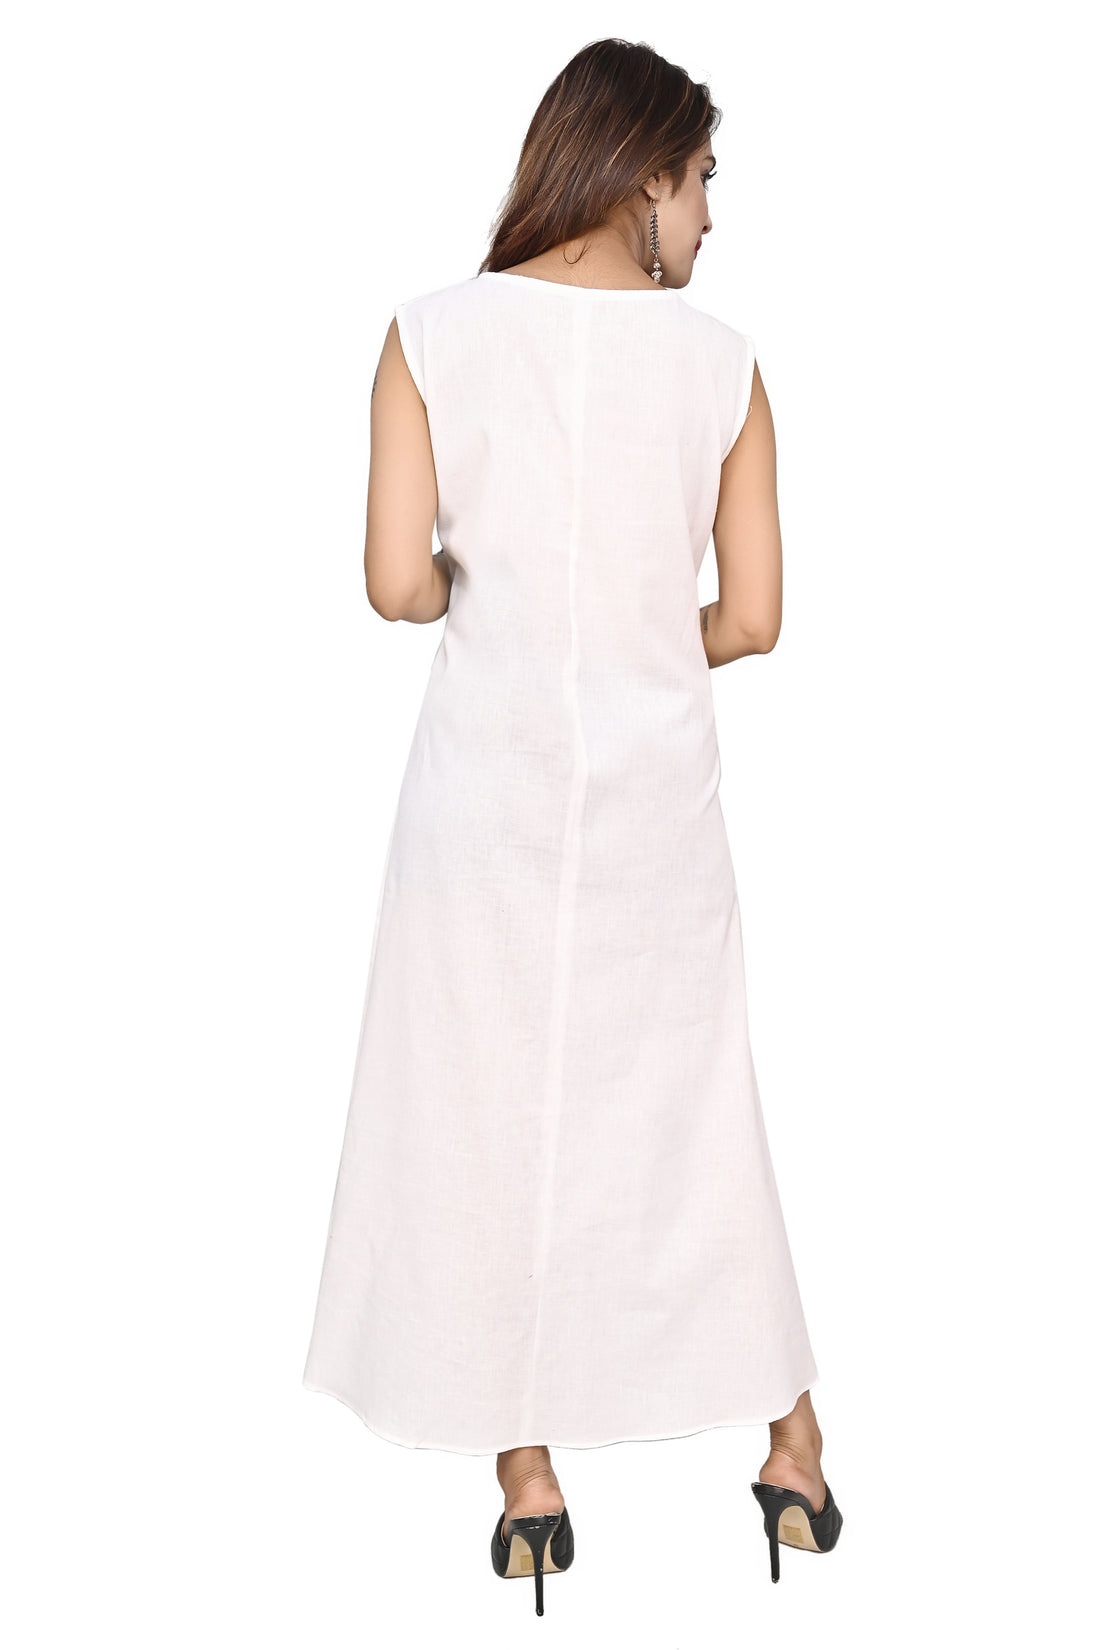 Nirmal online Premium Cotton Tunic Dress for Women in White Colour